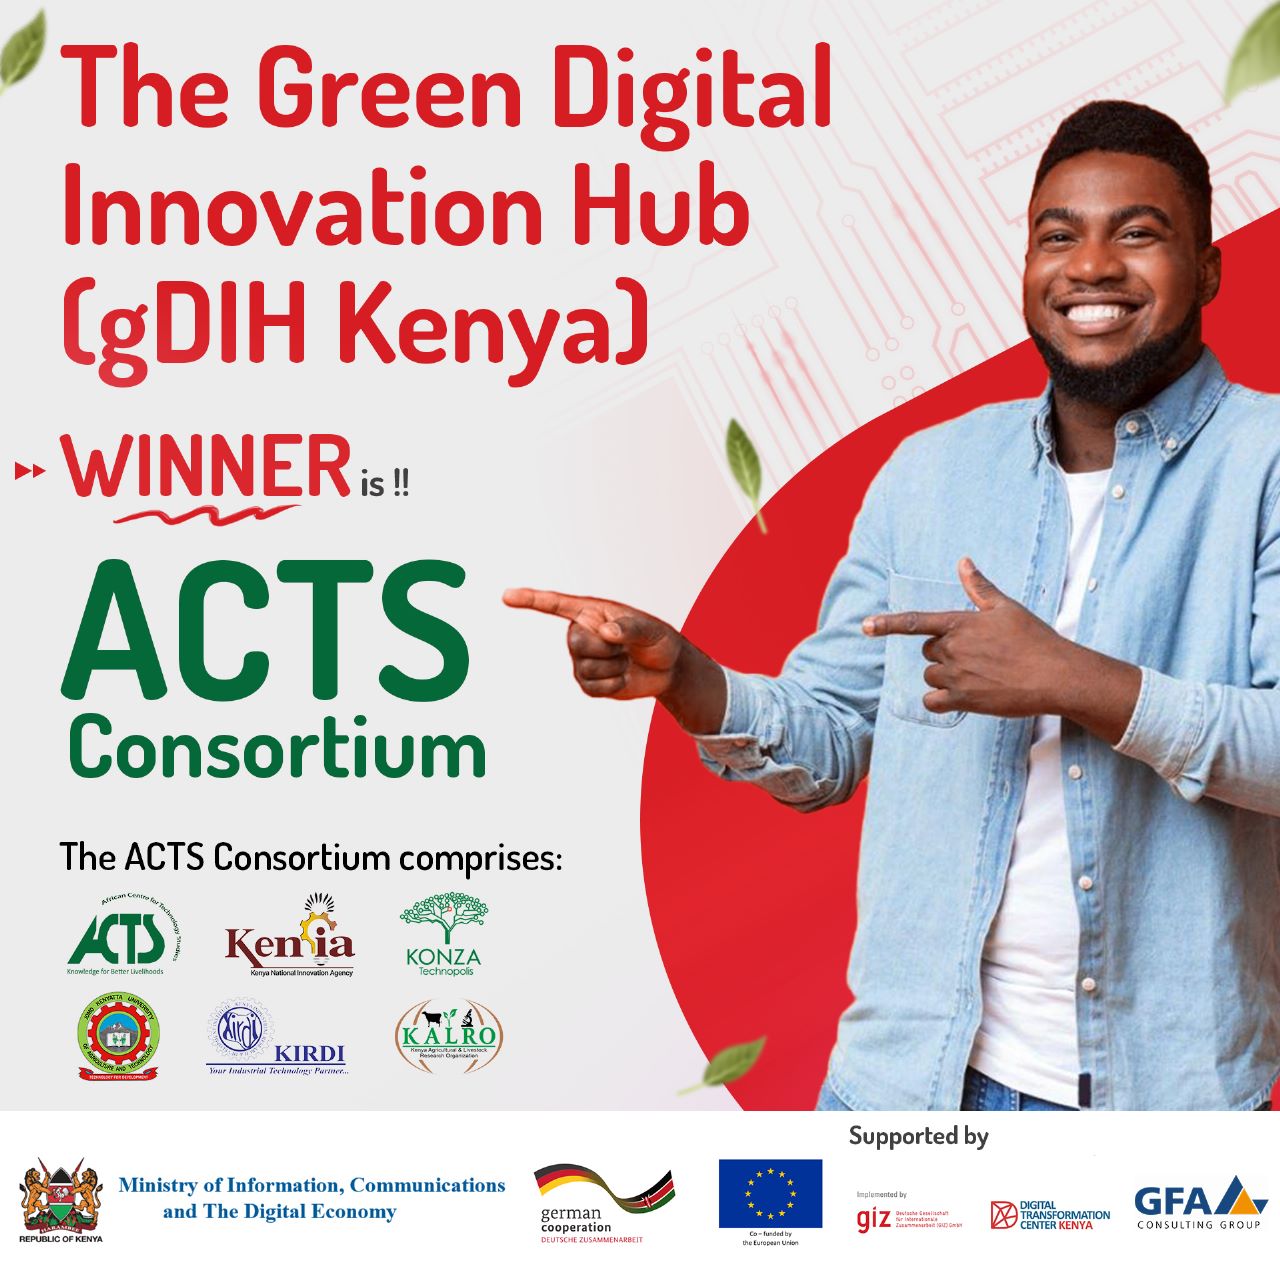 ACTS Consortium wins bid to establish and operate the Green Digital Innovation Hub (gDIH) in Kenya